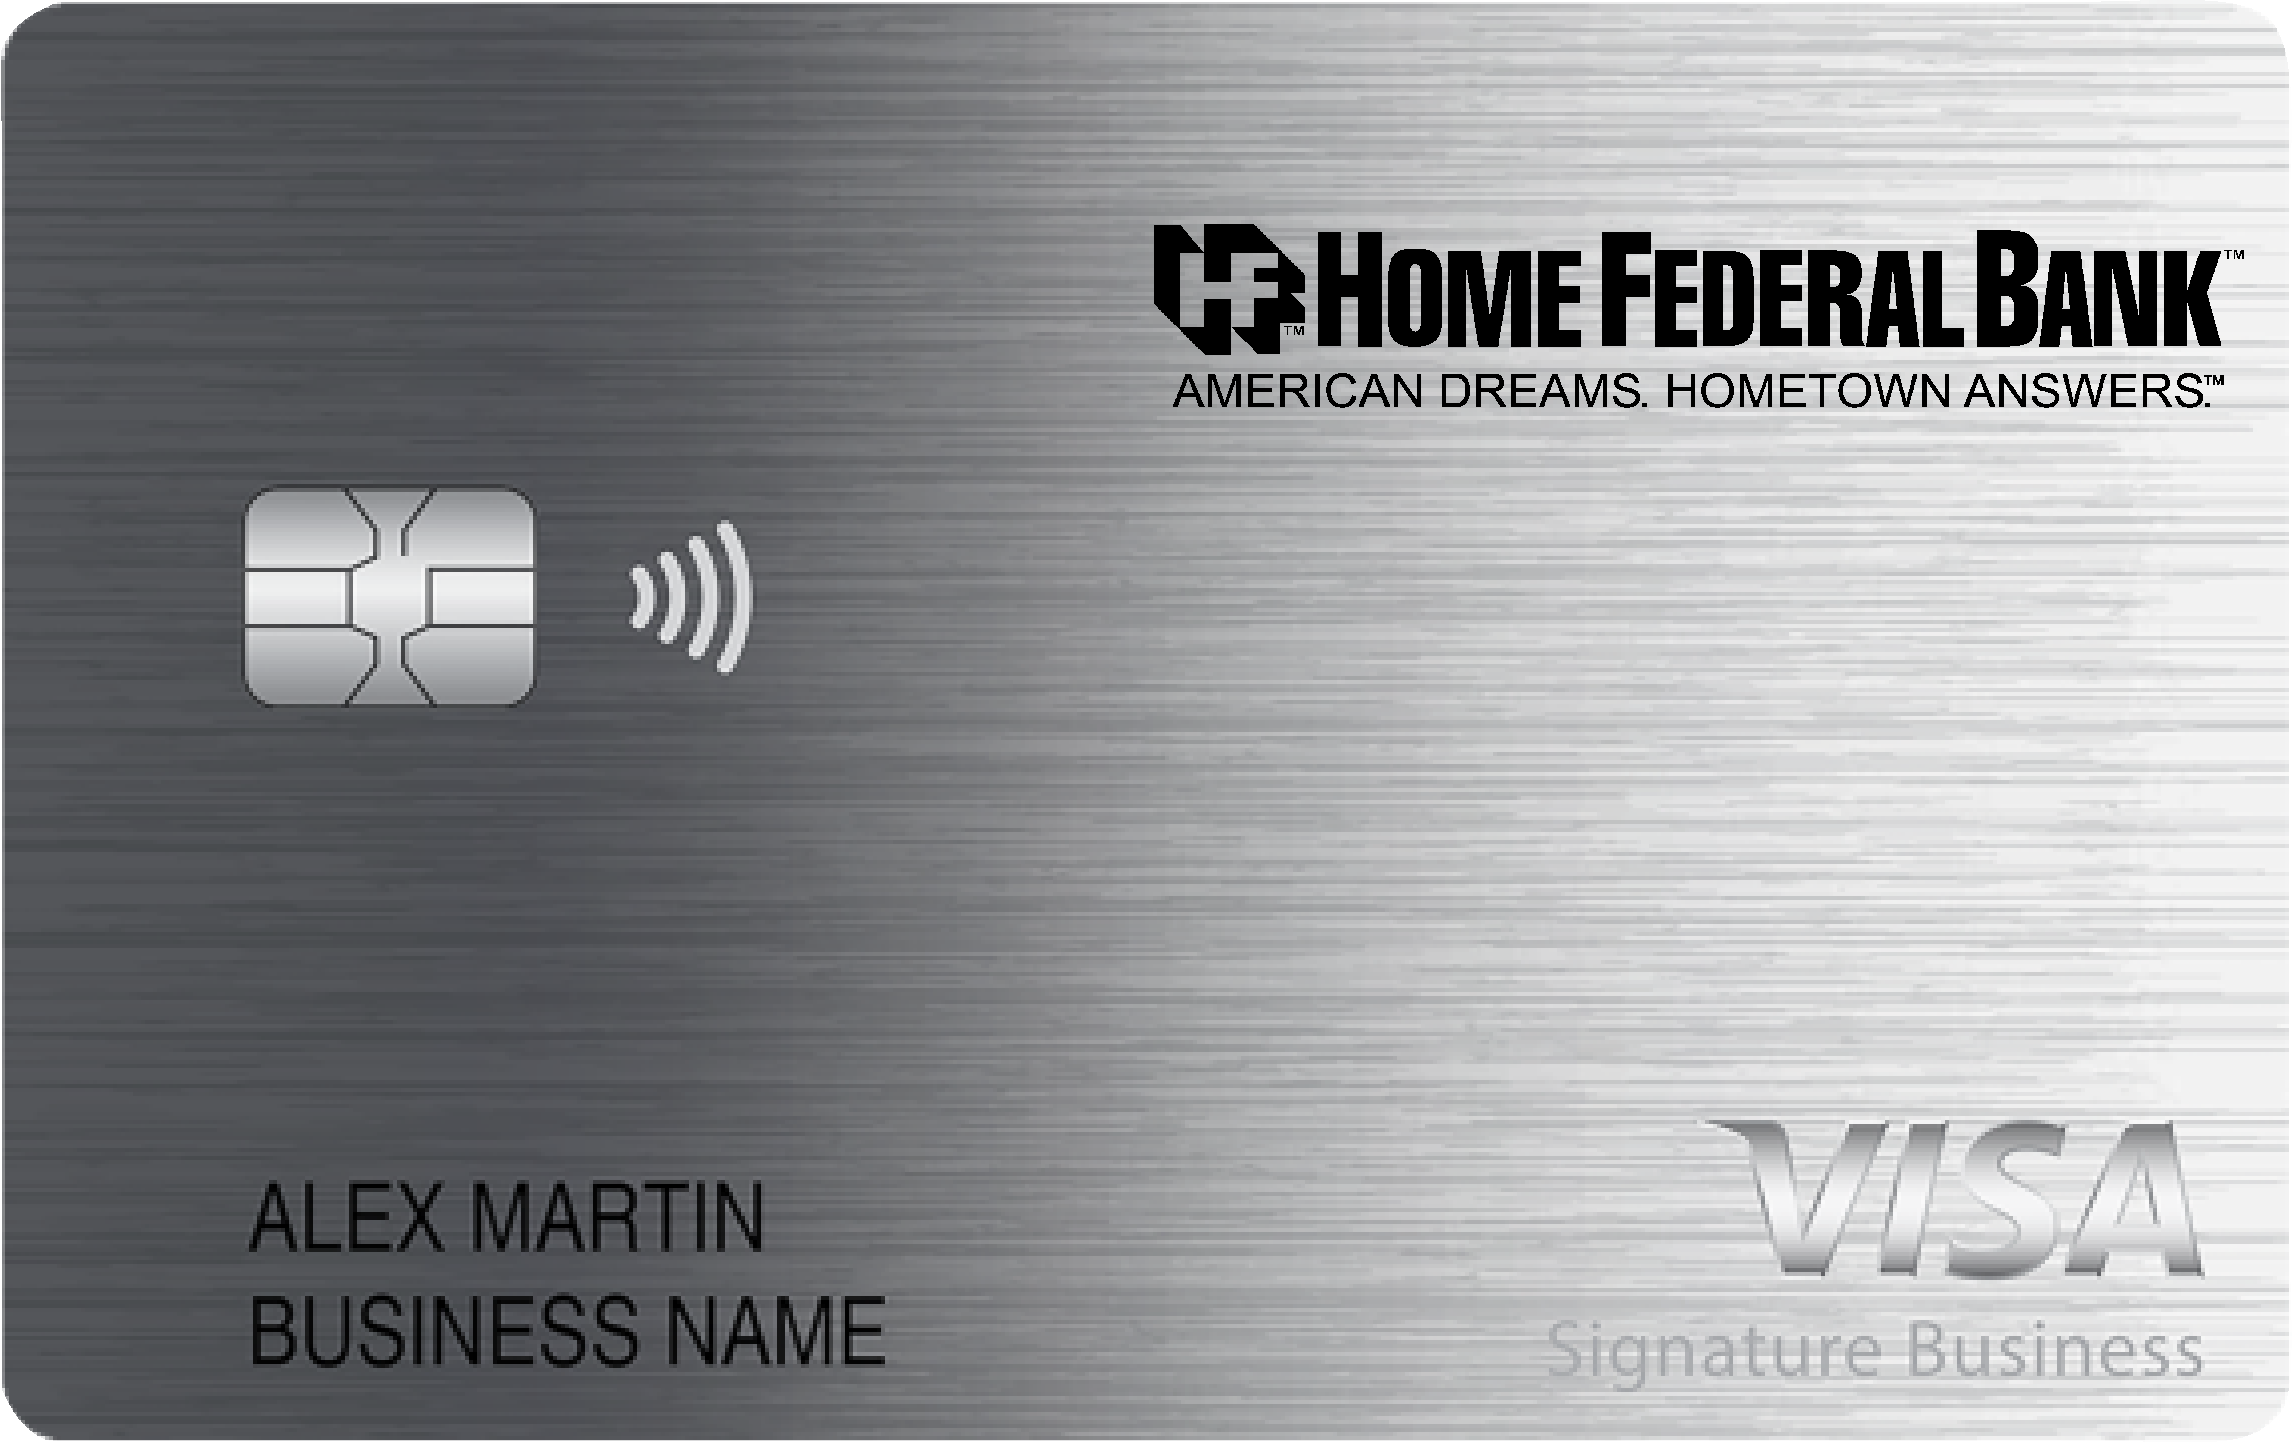 Home Federal Bank Smart Business Rewards Card